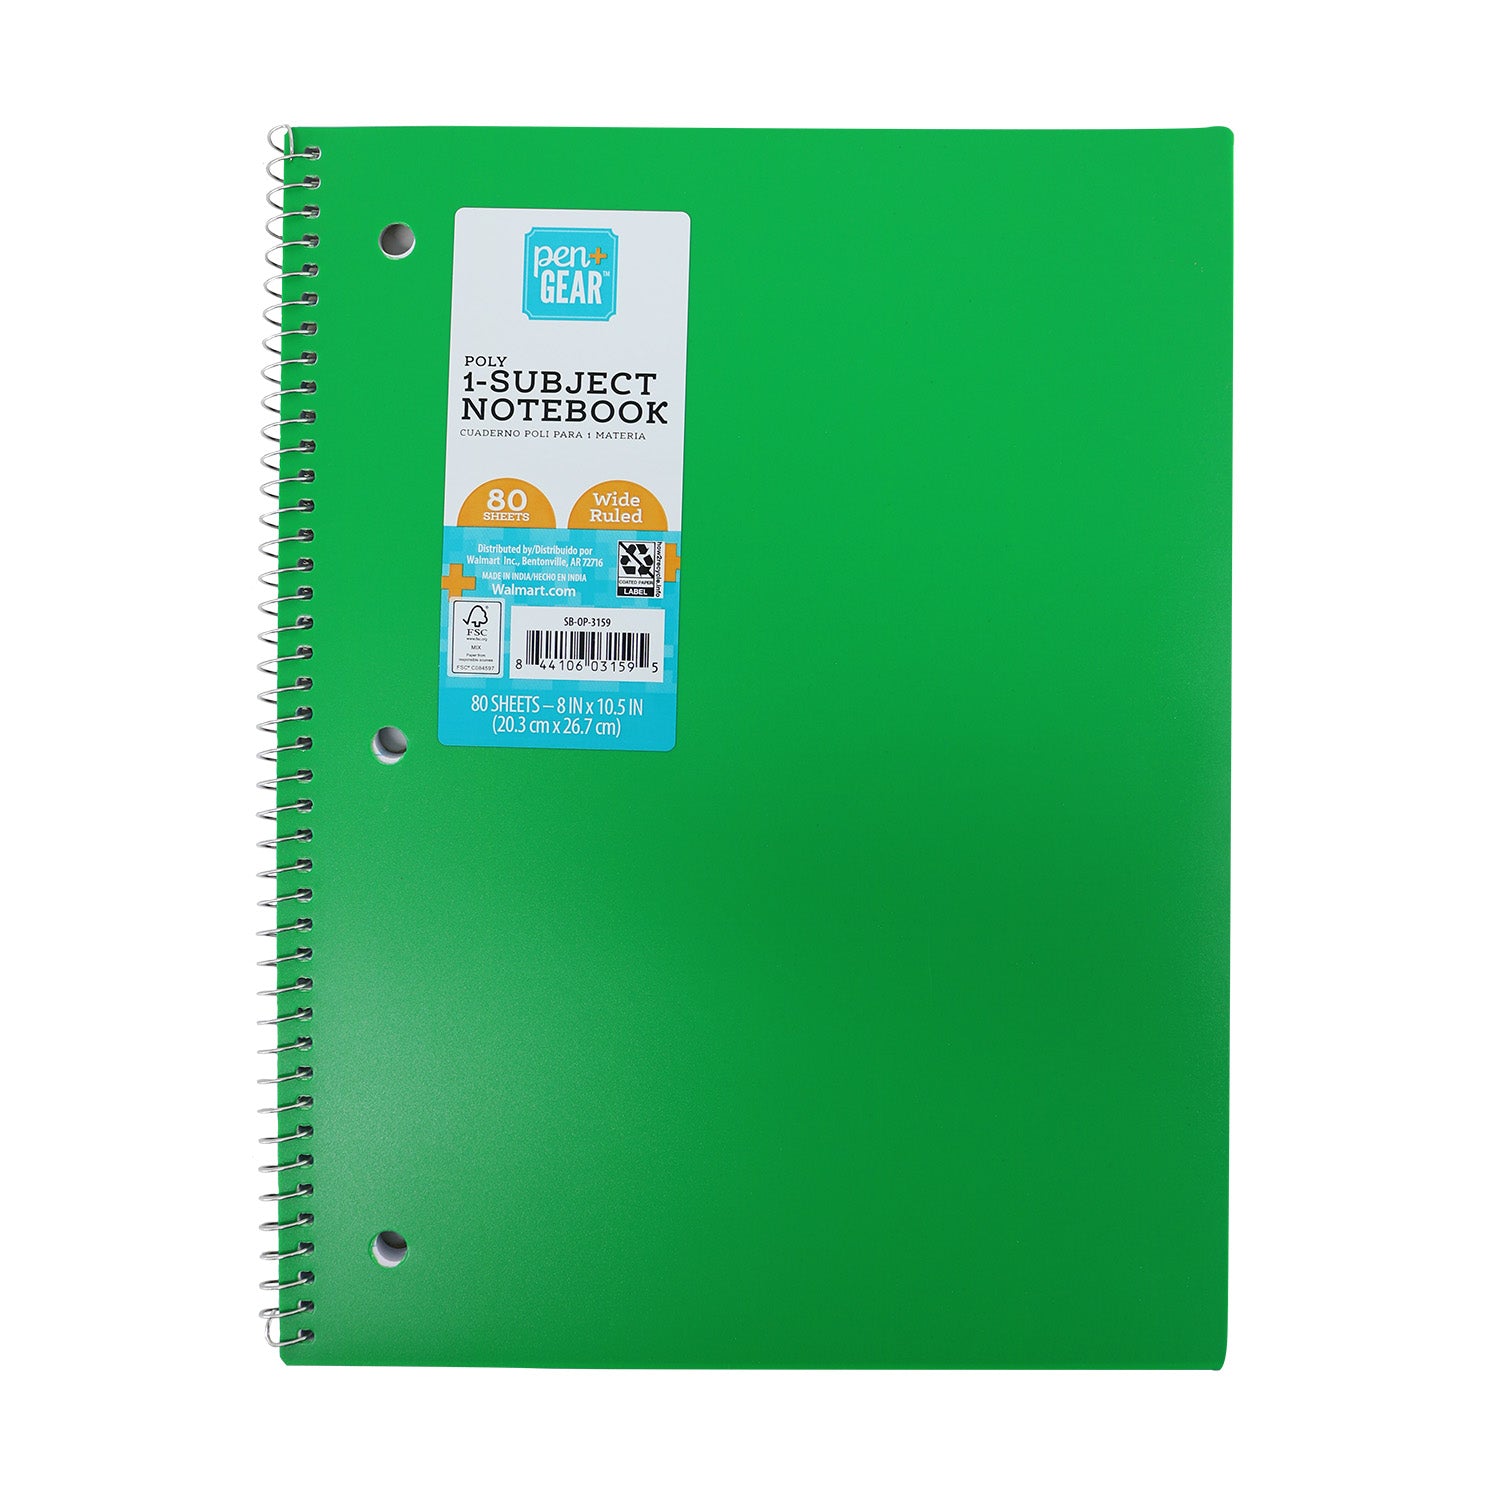 Wide Ruled Notebooks - Bulk School Supplies Wholesale Case of 24 Notebooks